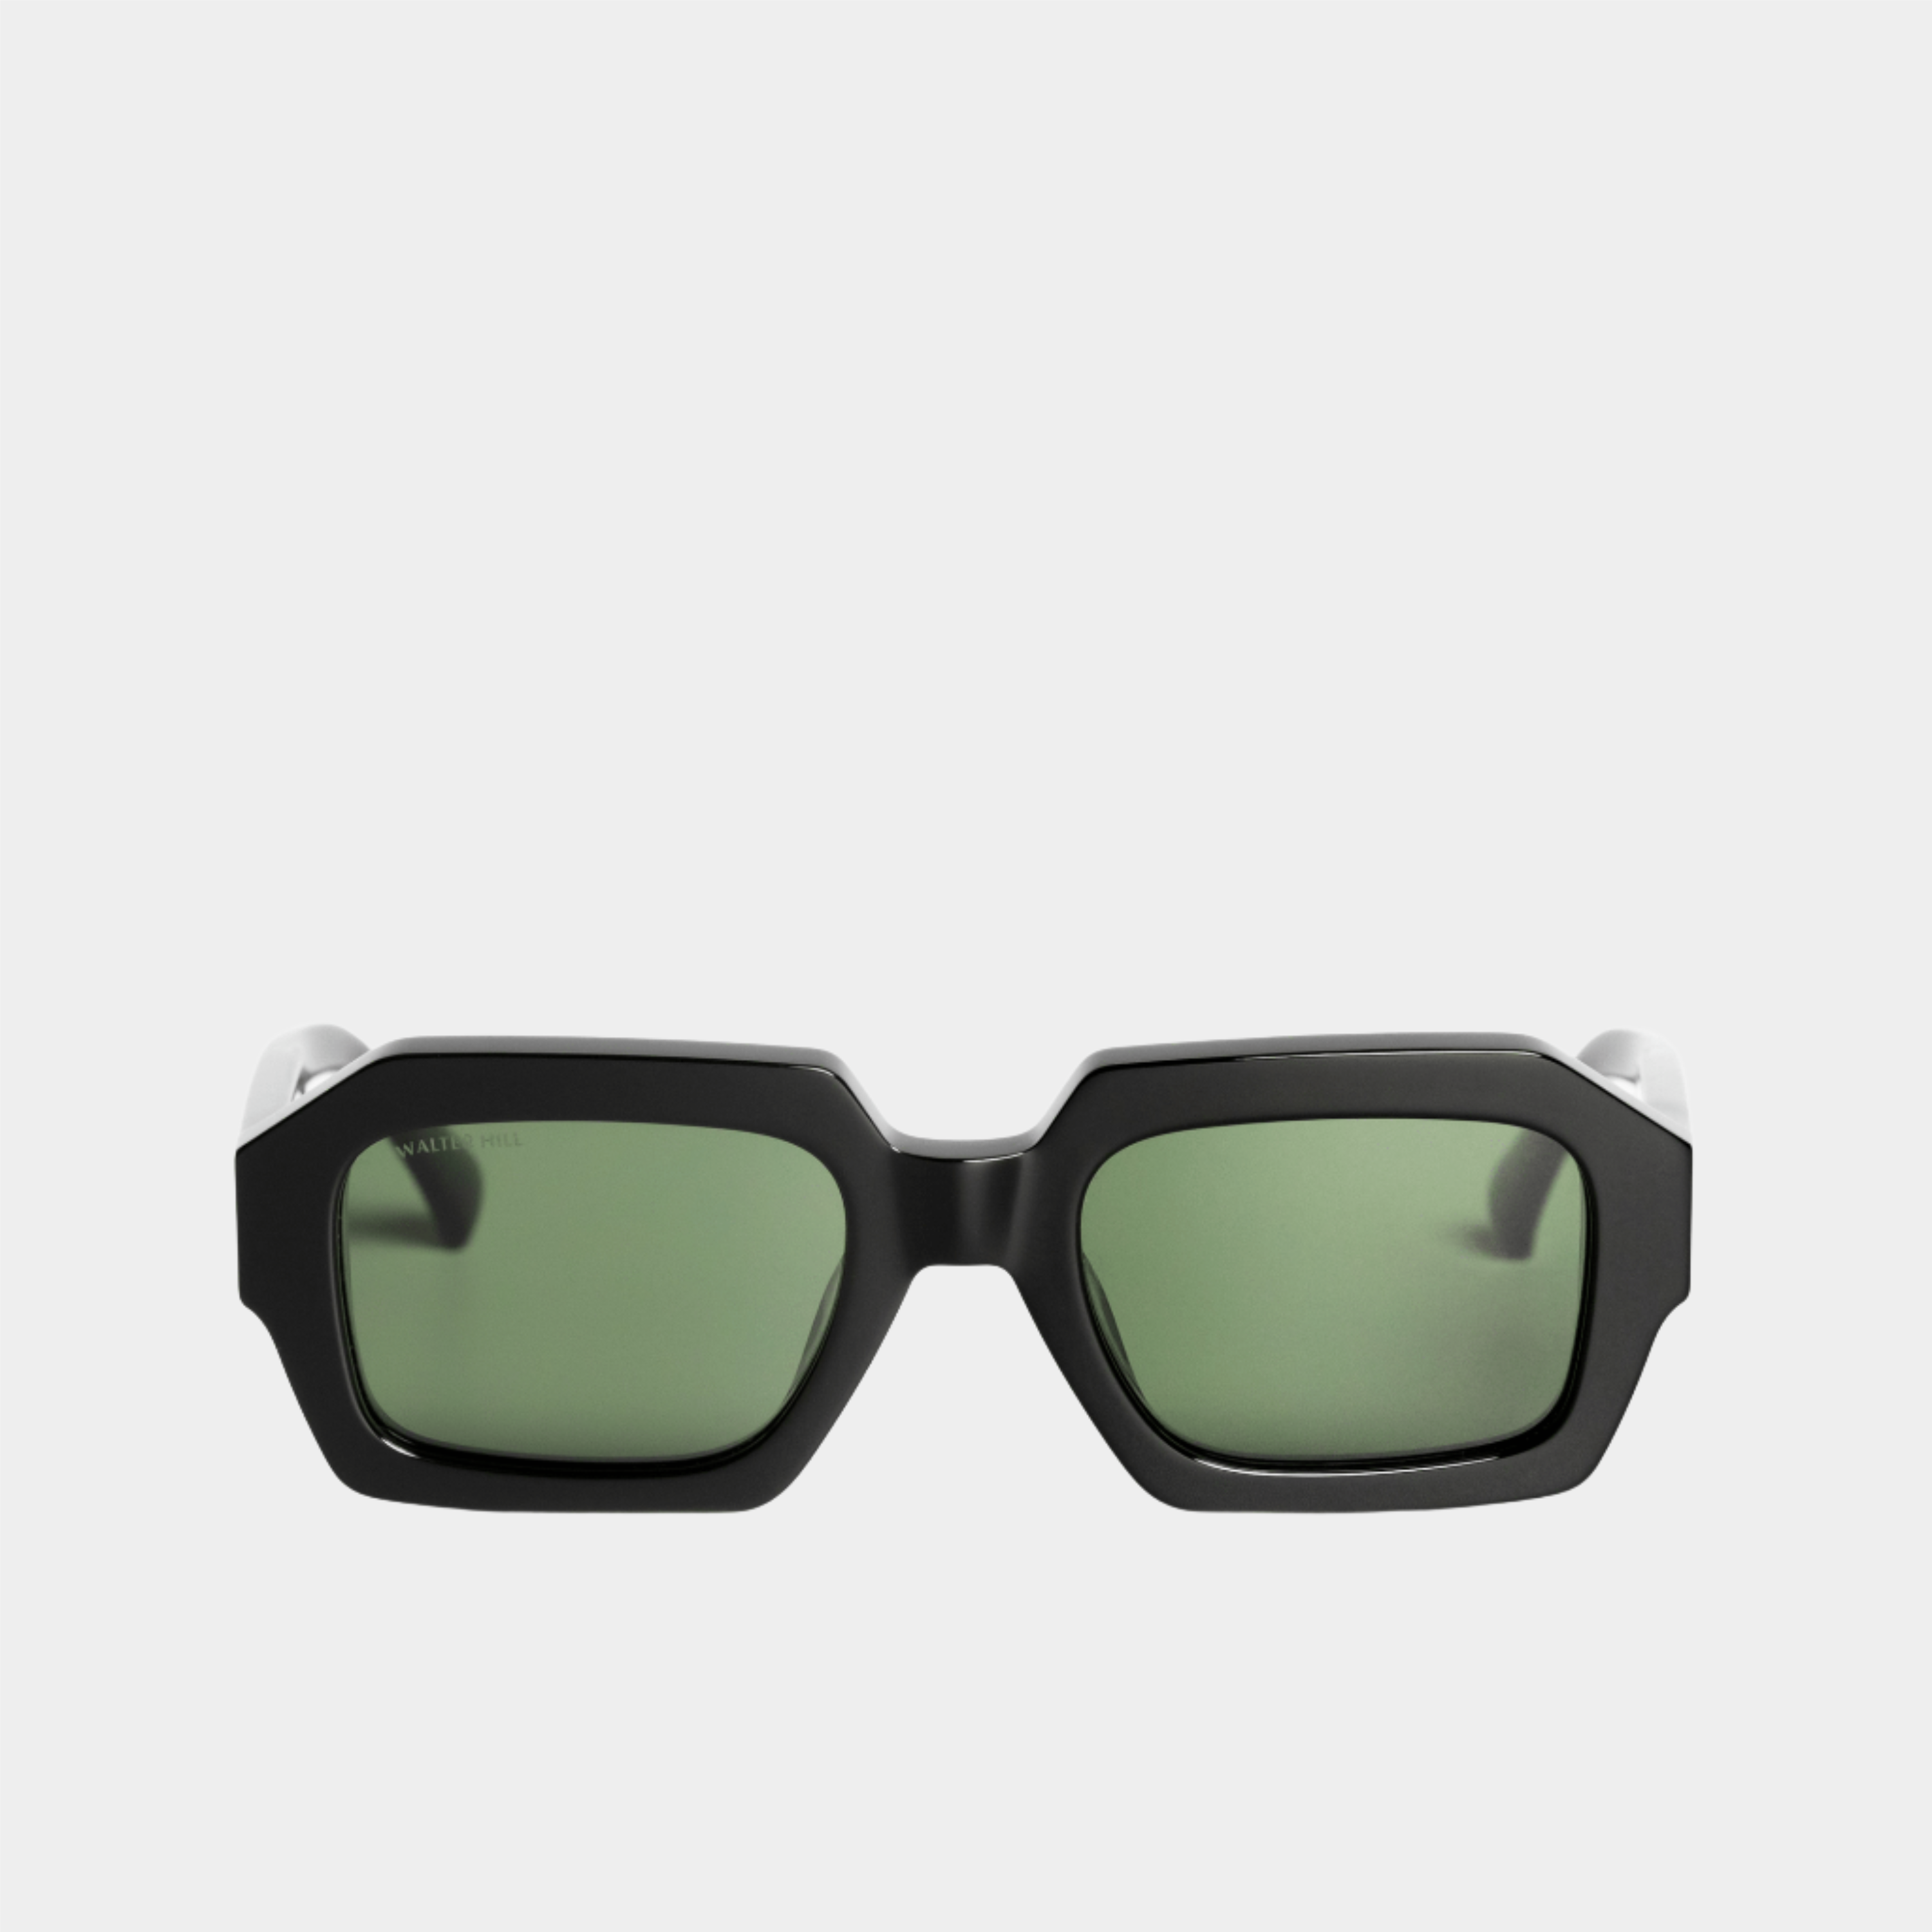 Walter Hill Sunglasses Black / Standard / Polarized Cat.3 LAYNE - Black - Green